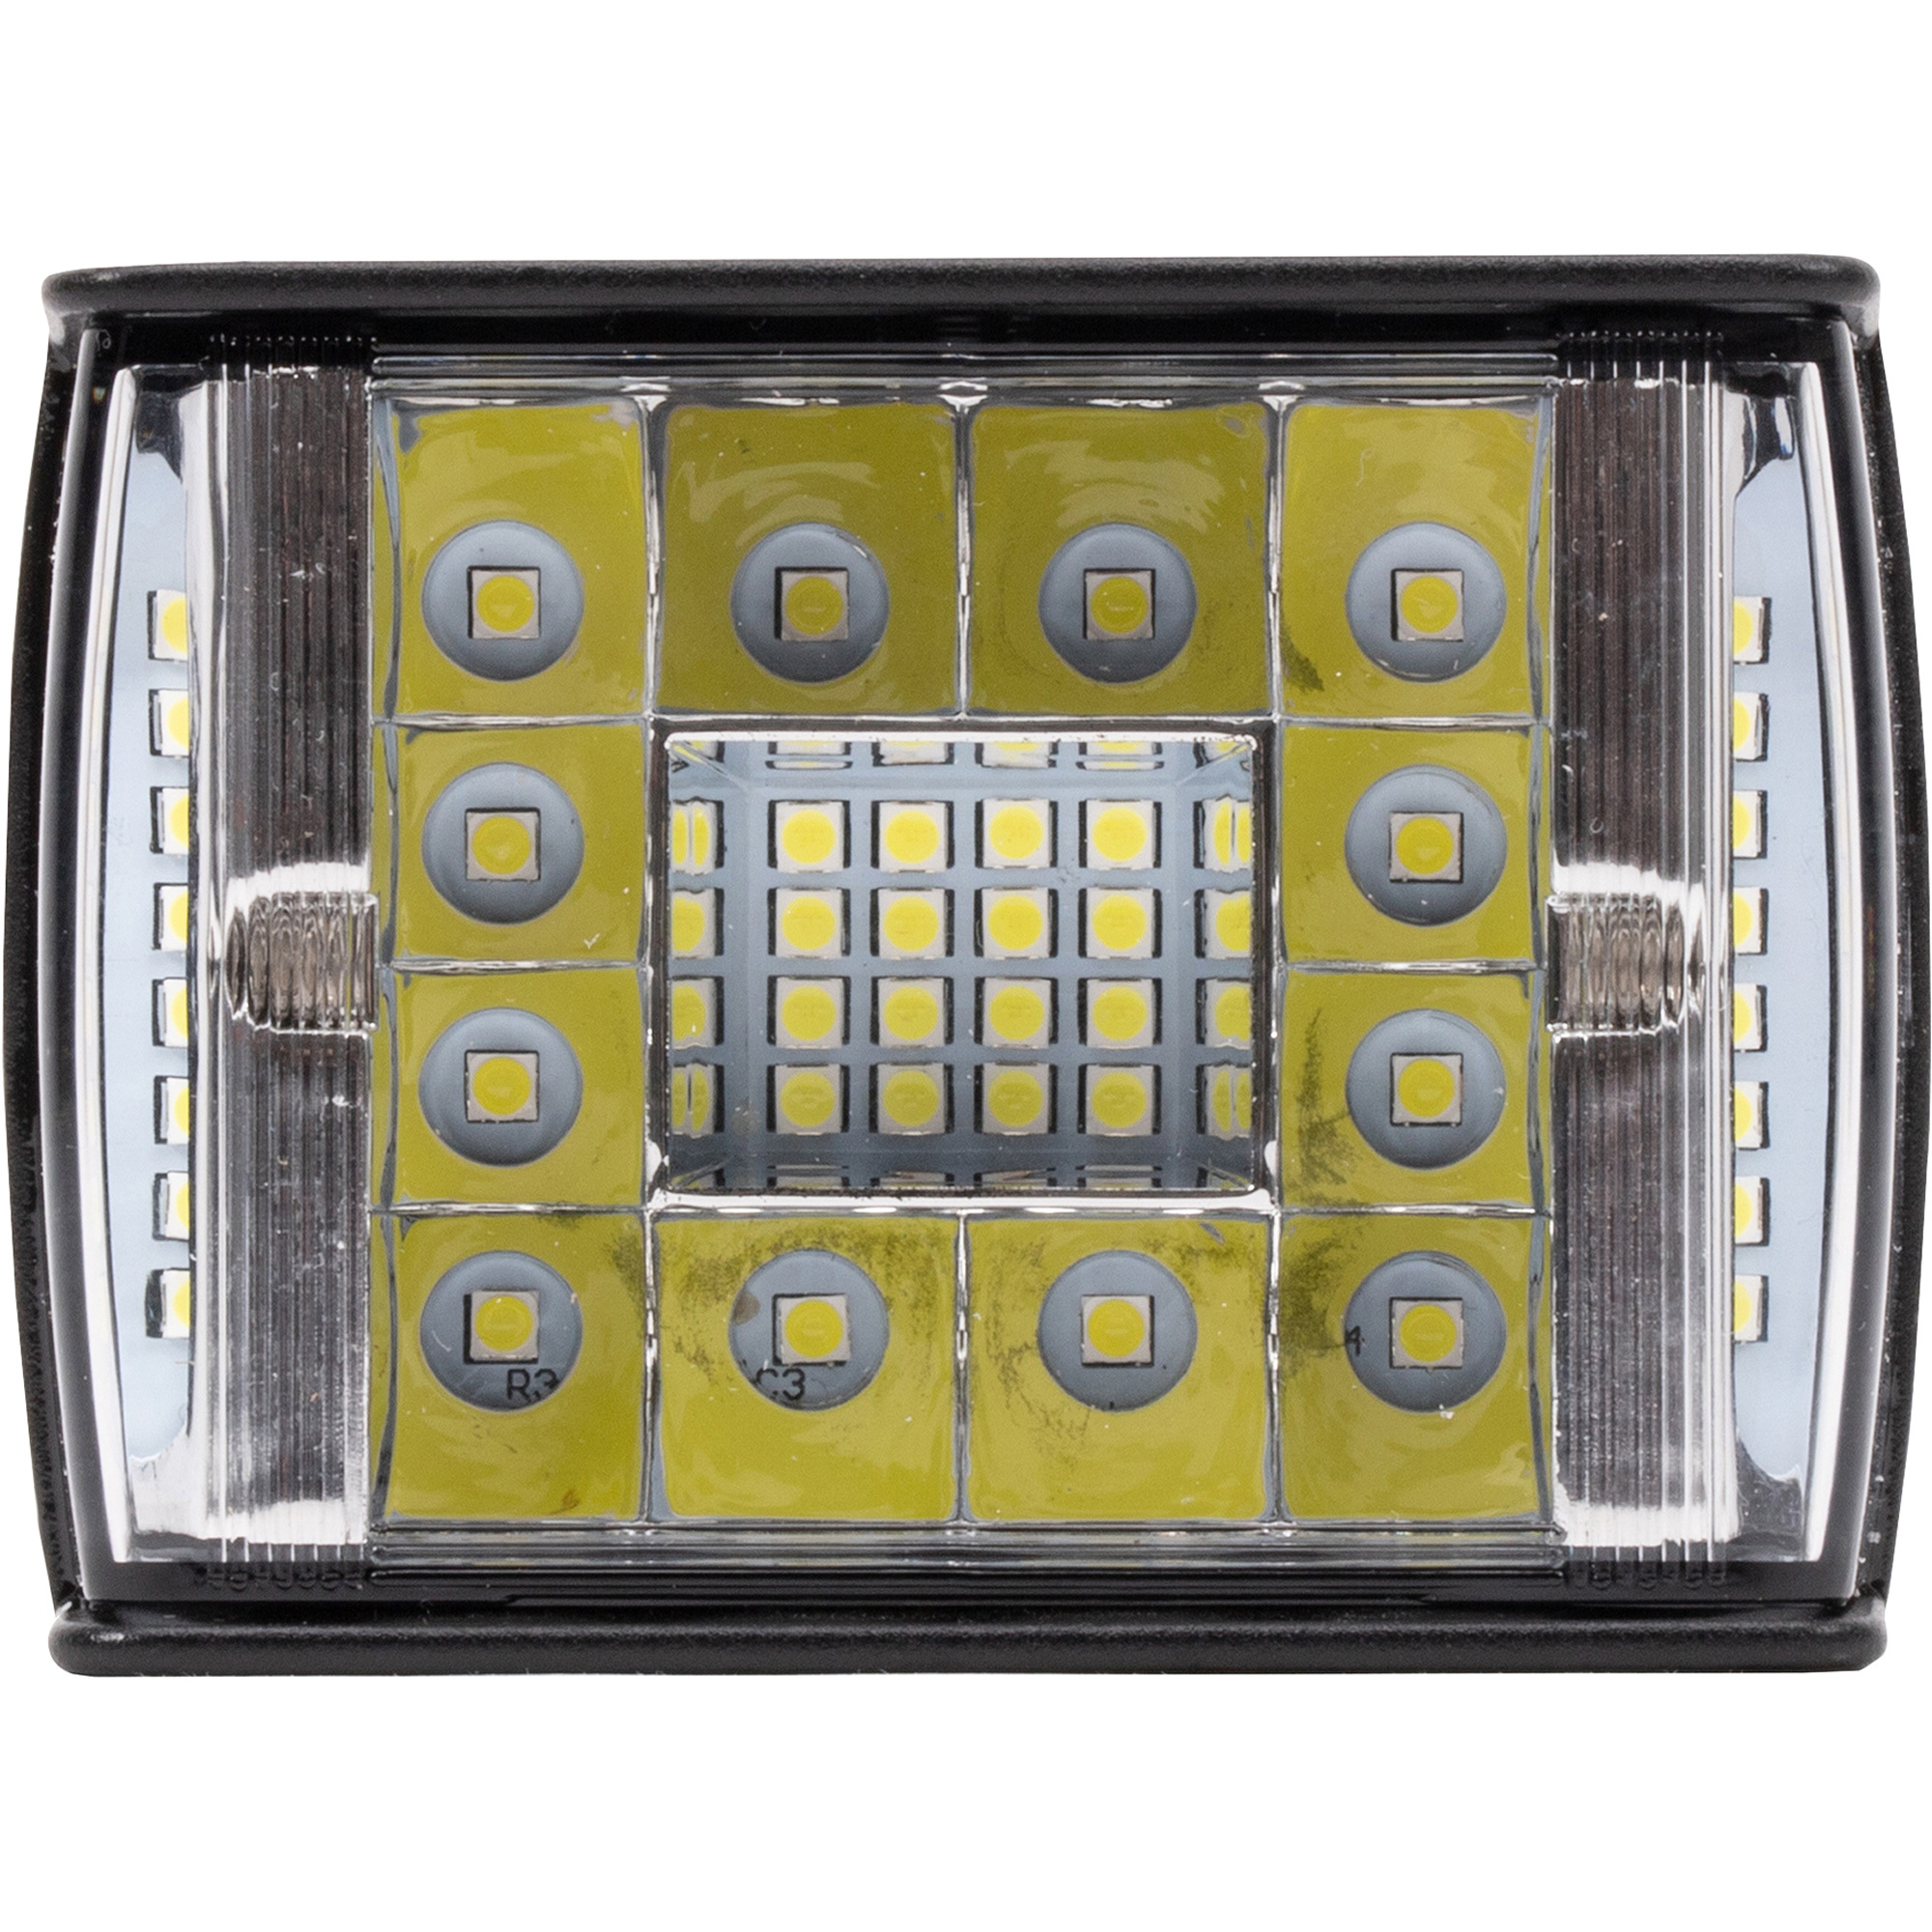 Blazer 12V Wide Beam LED Utility Work Light â 4Inch, 44 LEDs, Square, Model CWL529